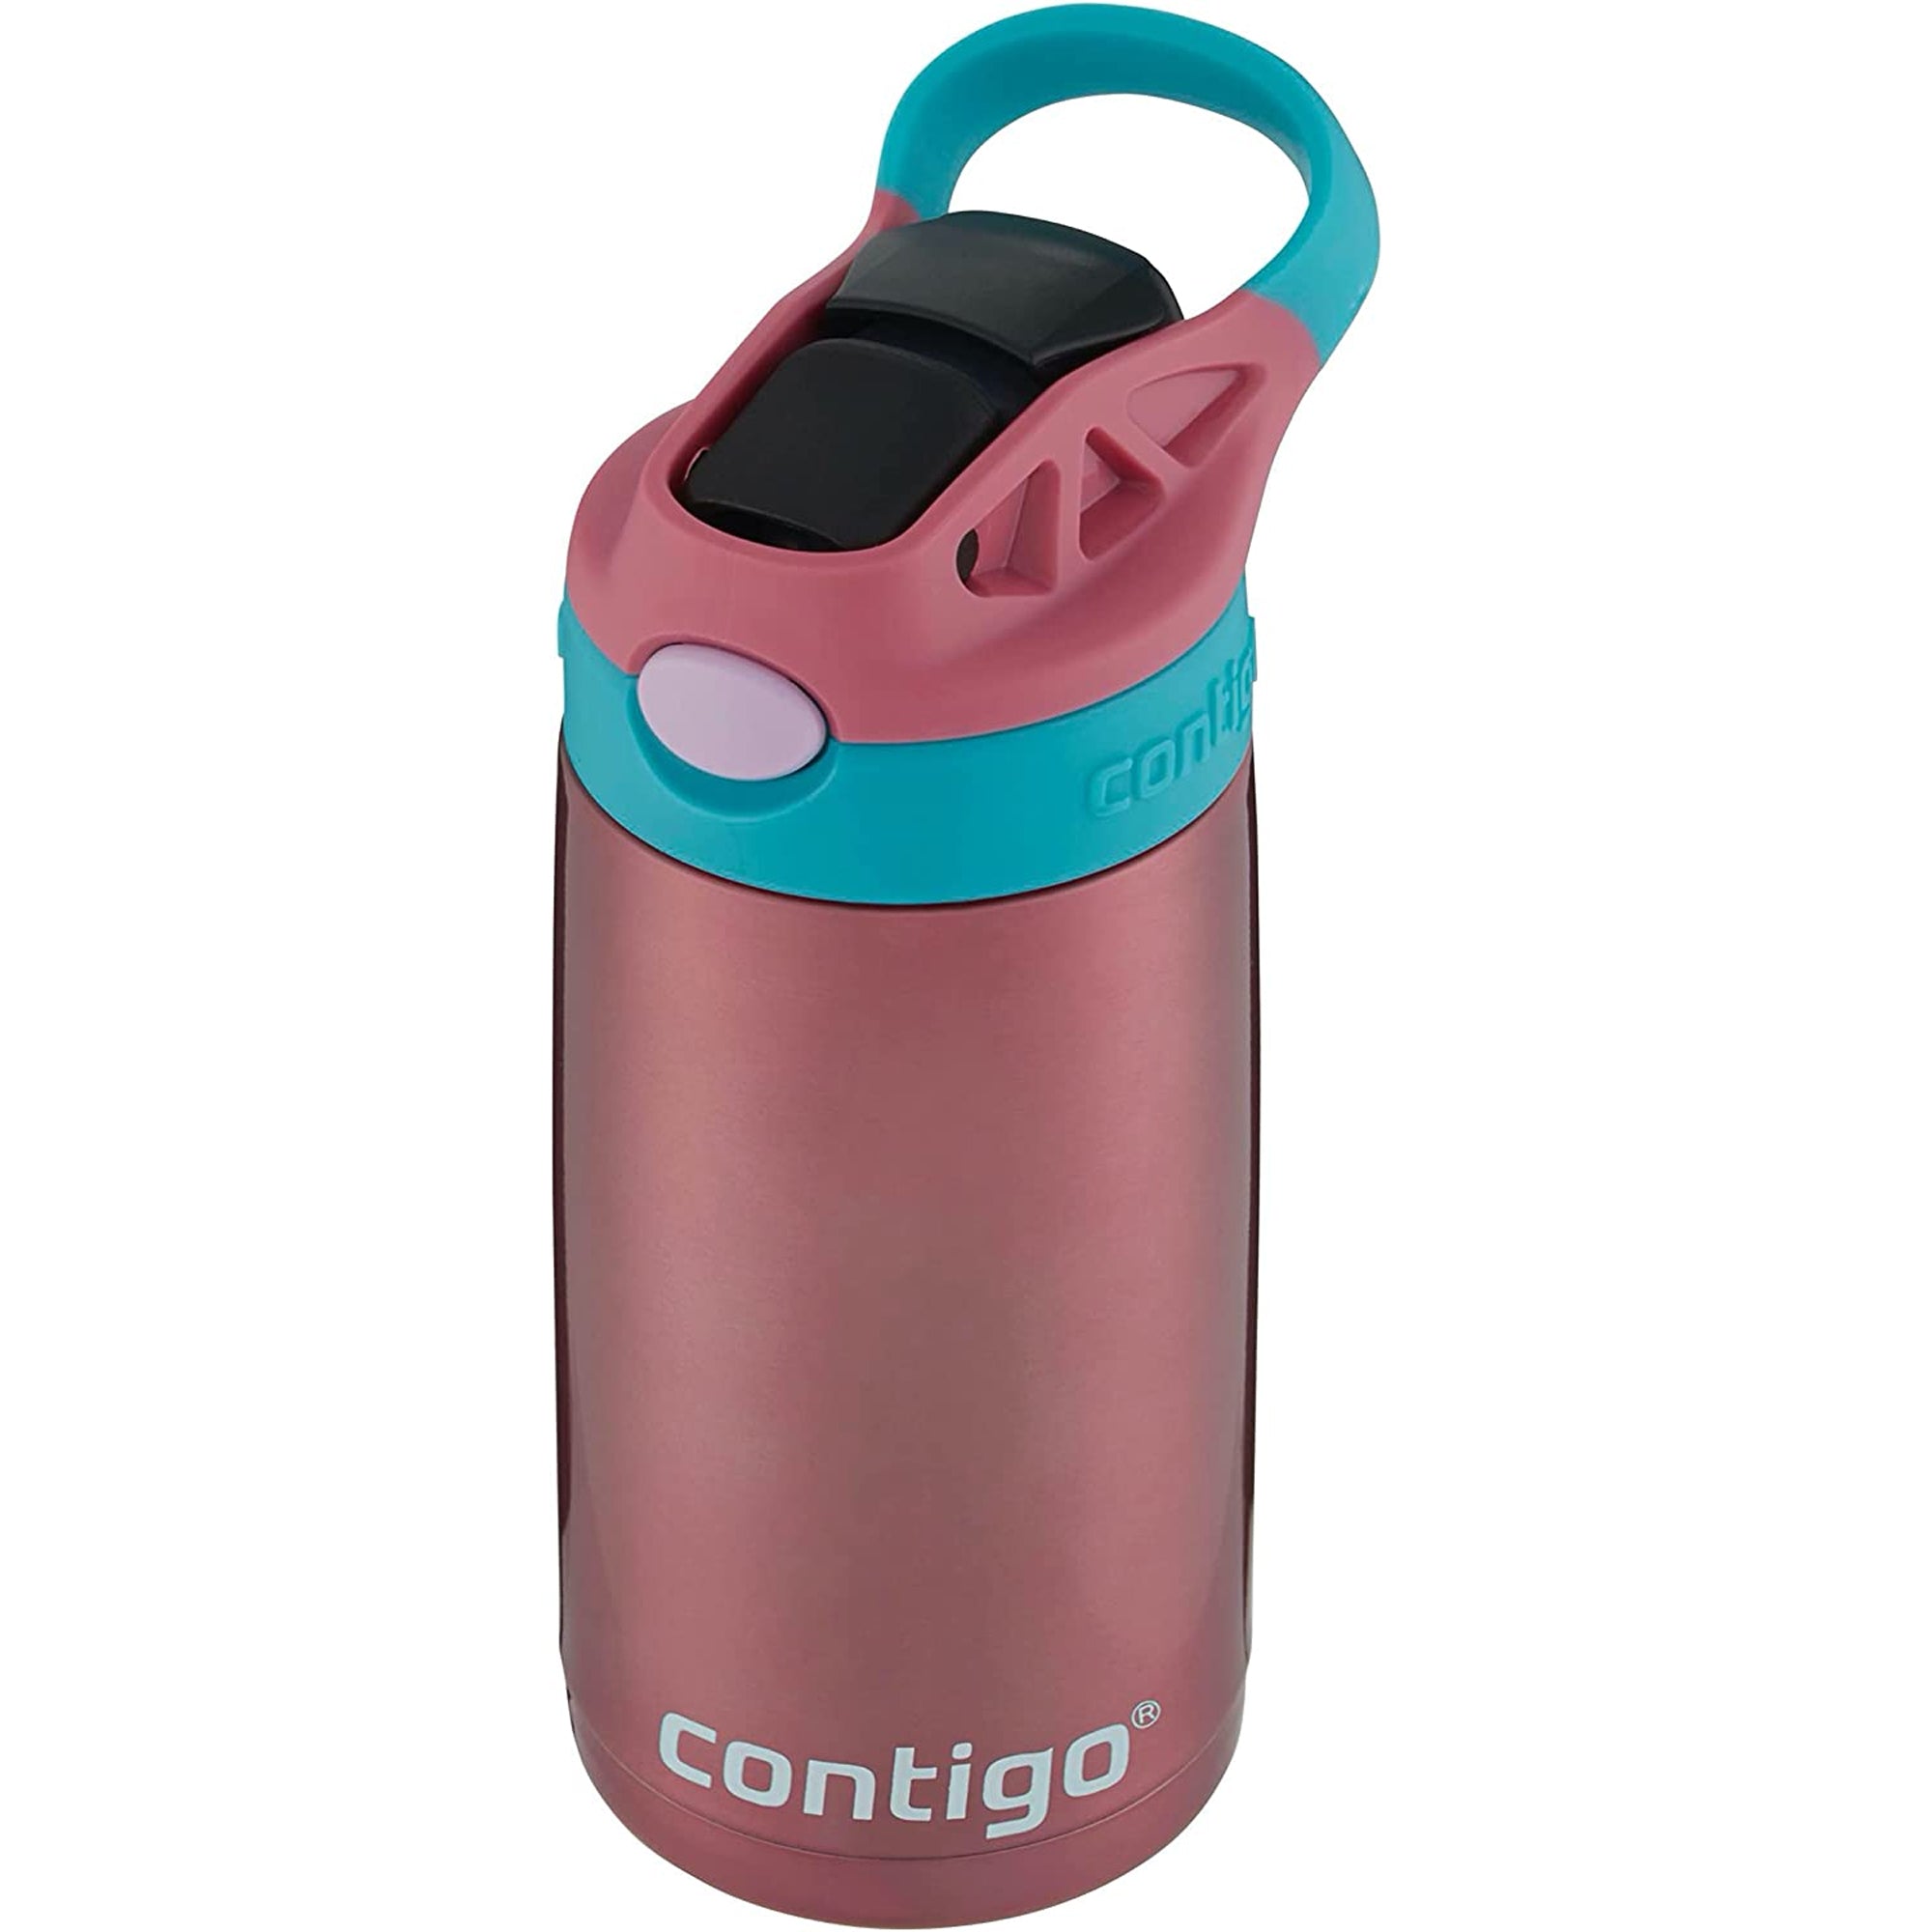 Contigo Kid's 13 oz. Aubrey Vacuum Insulated Stainless Steel Water Bottle- Punch Contigo